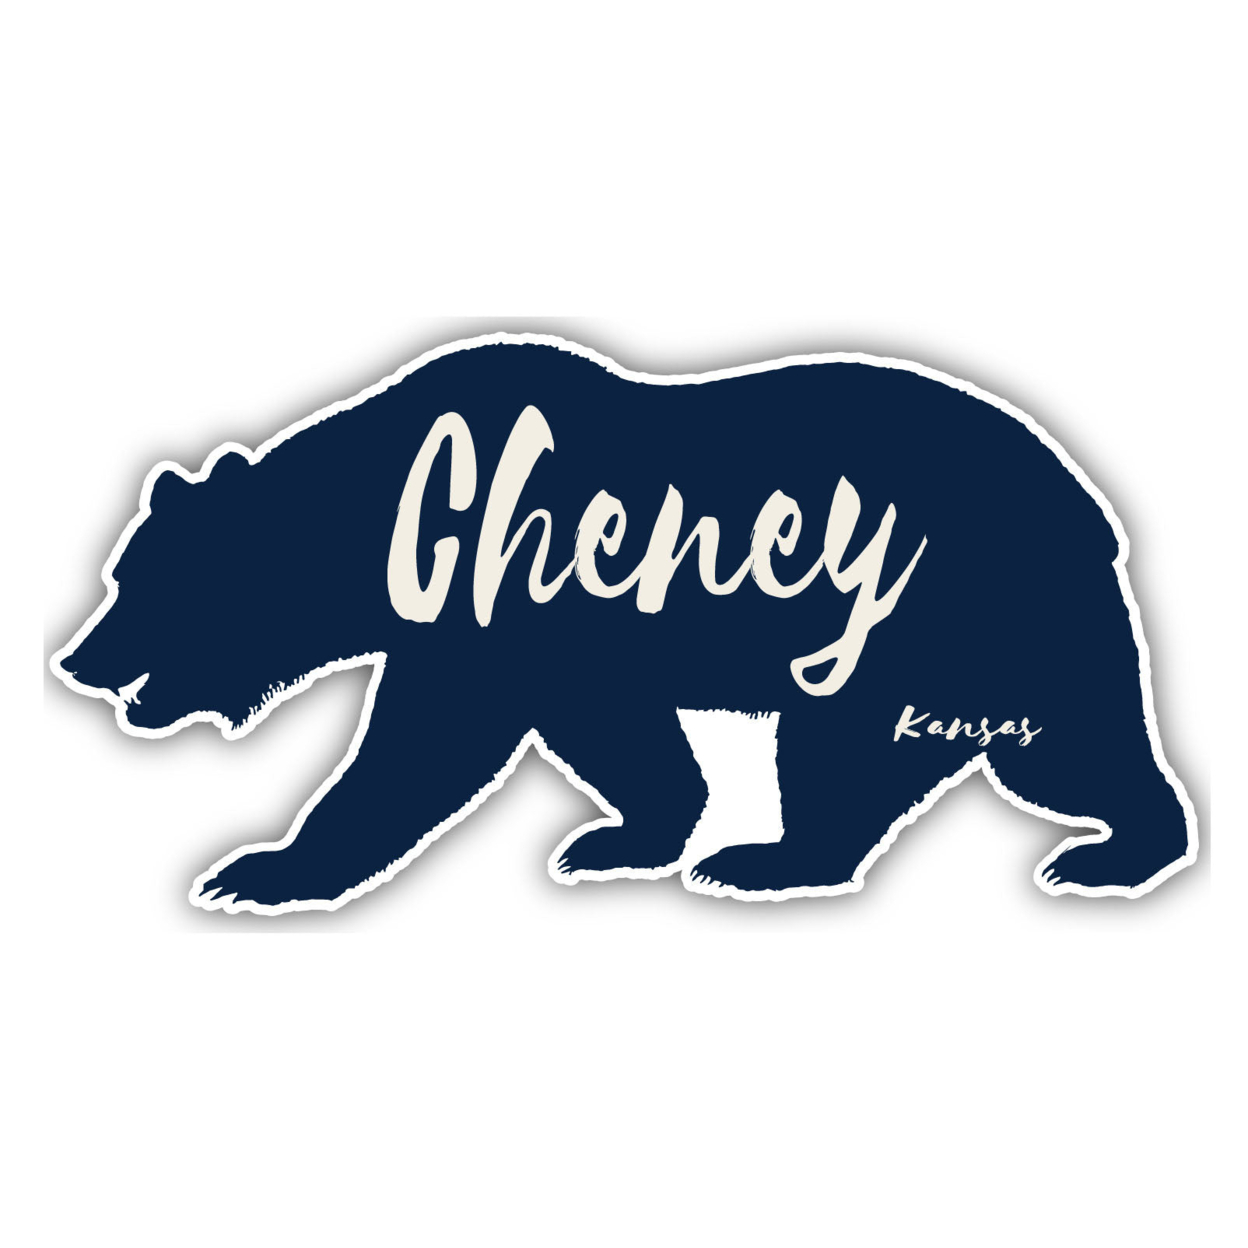 Cheney Kansas Souvenir Decorative Stickers (Choose Theme And Size) - 4-Pack, 4-Inch, Bear